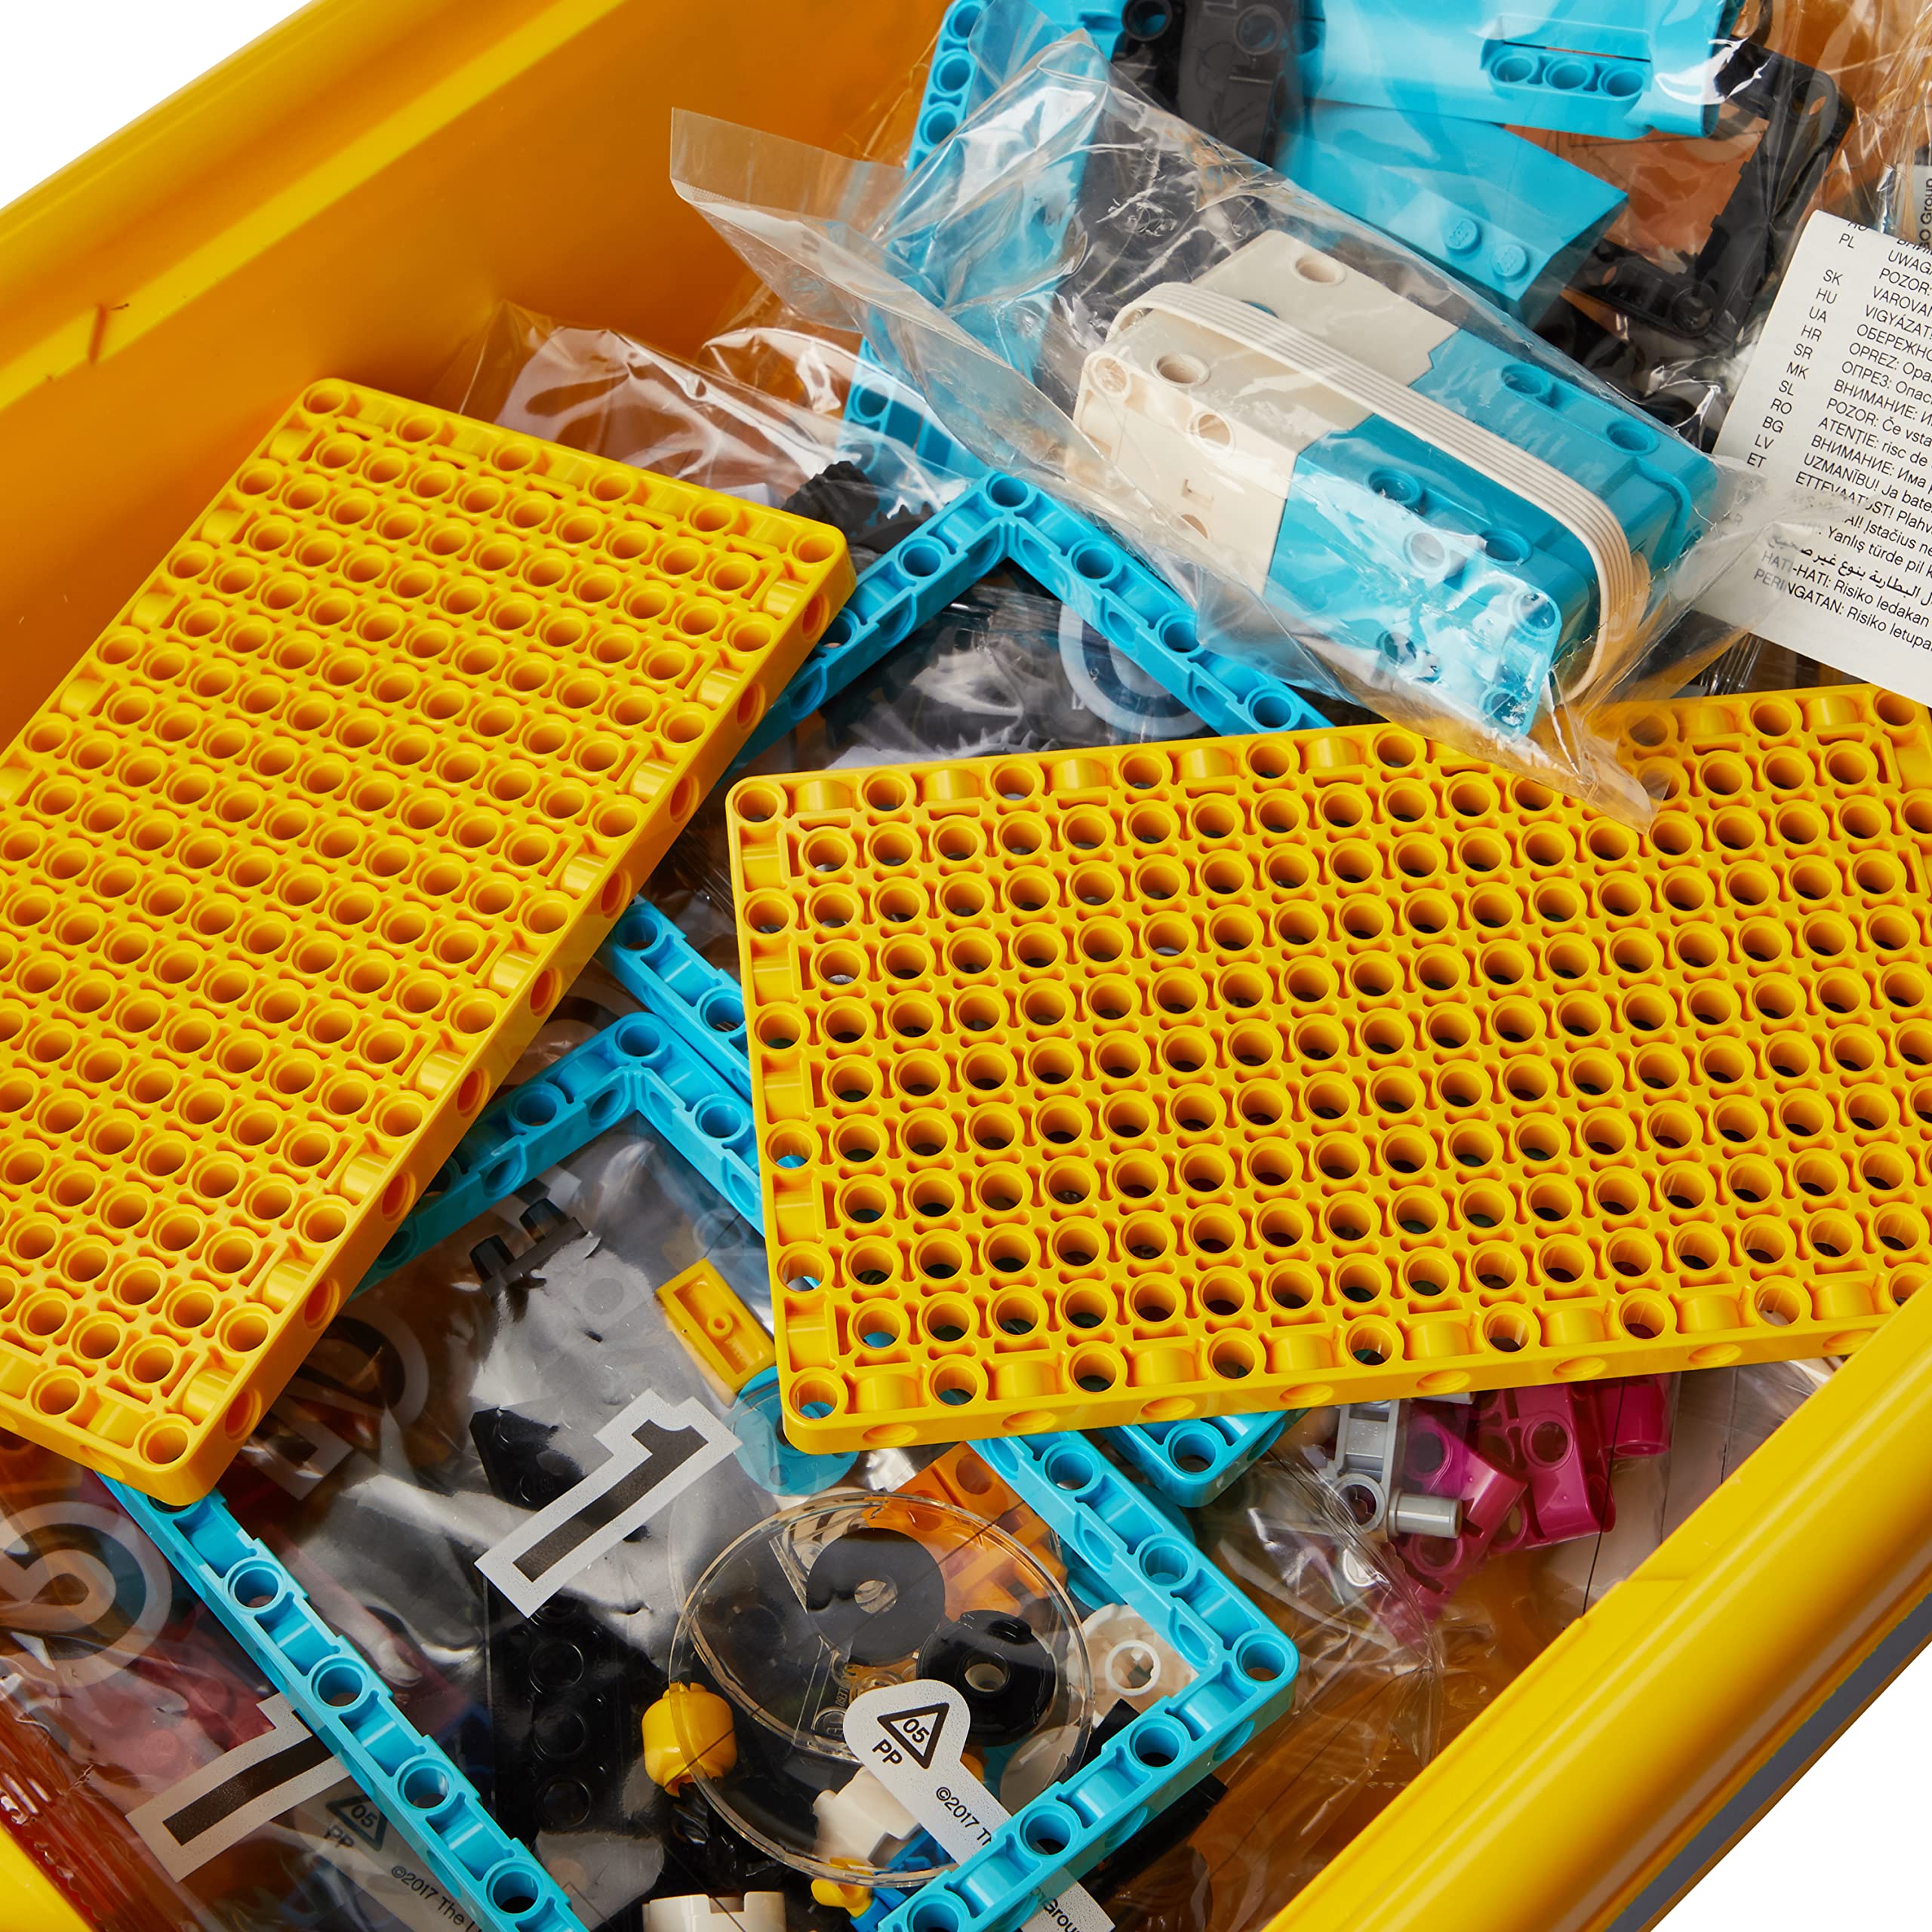 Lego Education Spike Prime Set, toy interlocking building sets